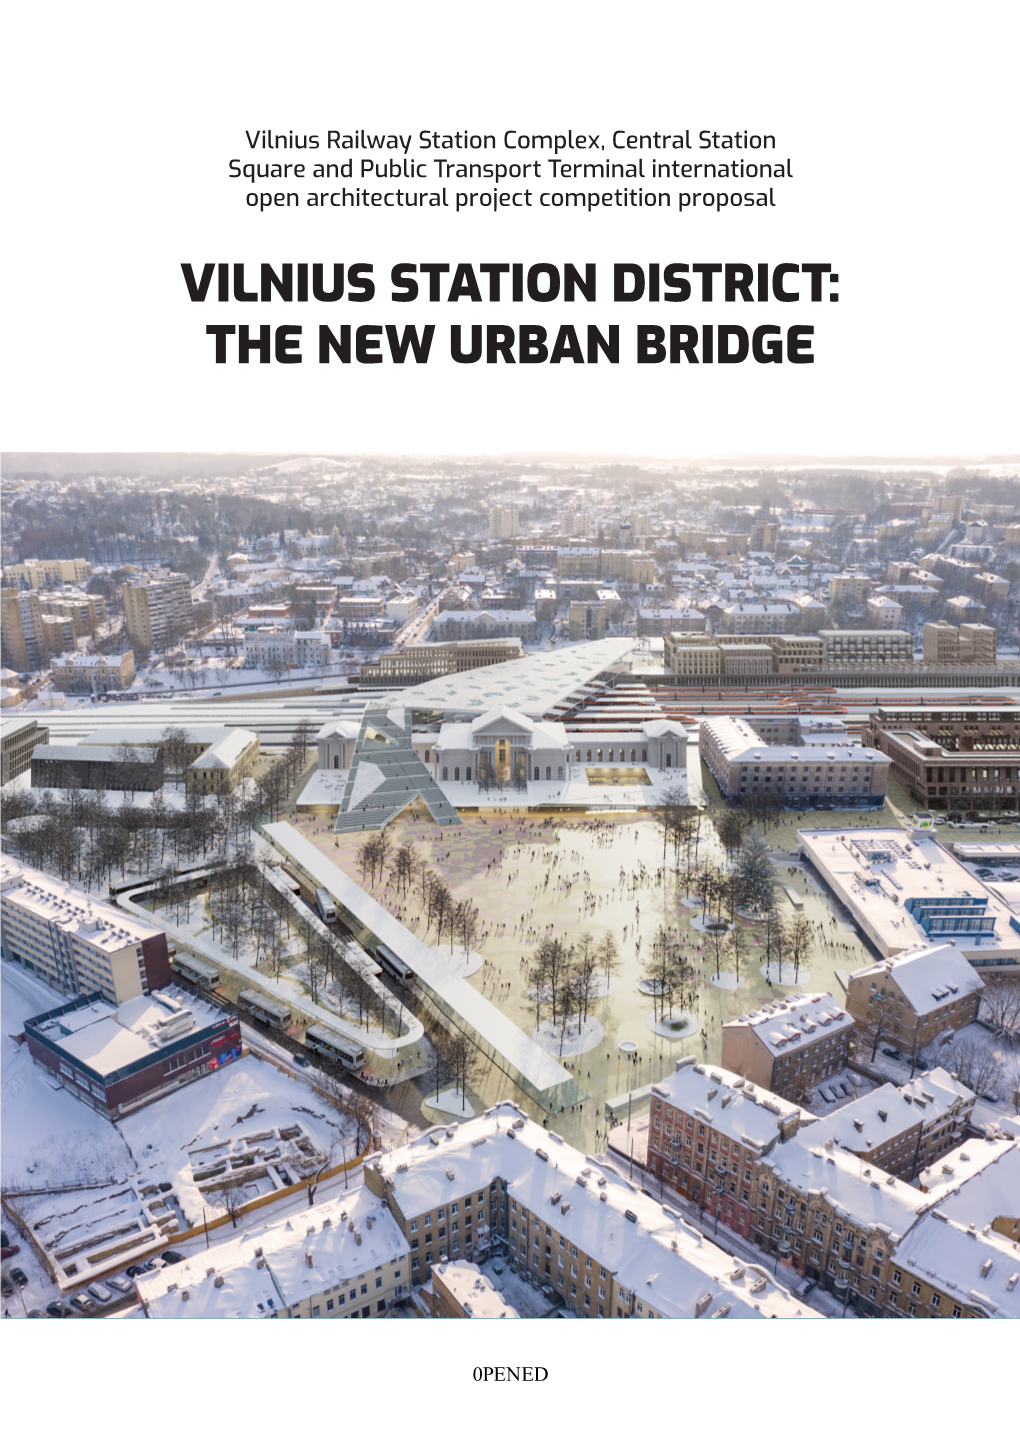 Vilnius Station District: the New Urban Bridge